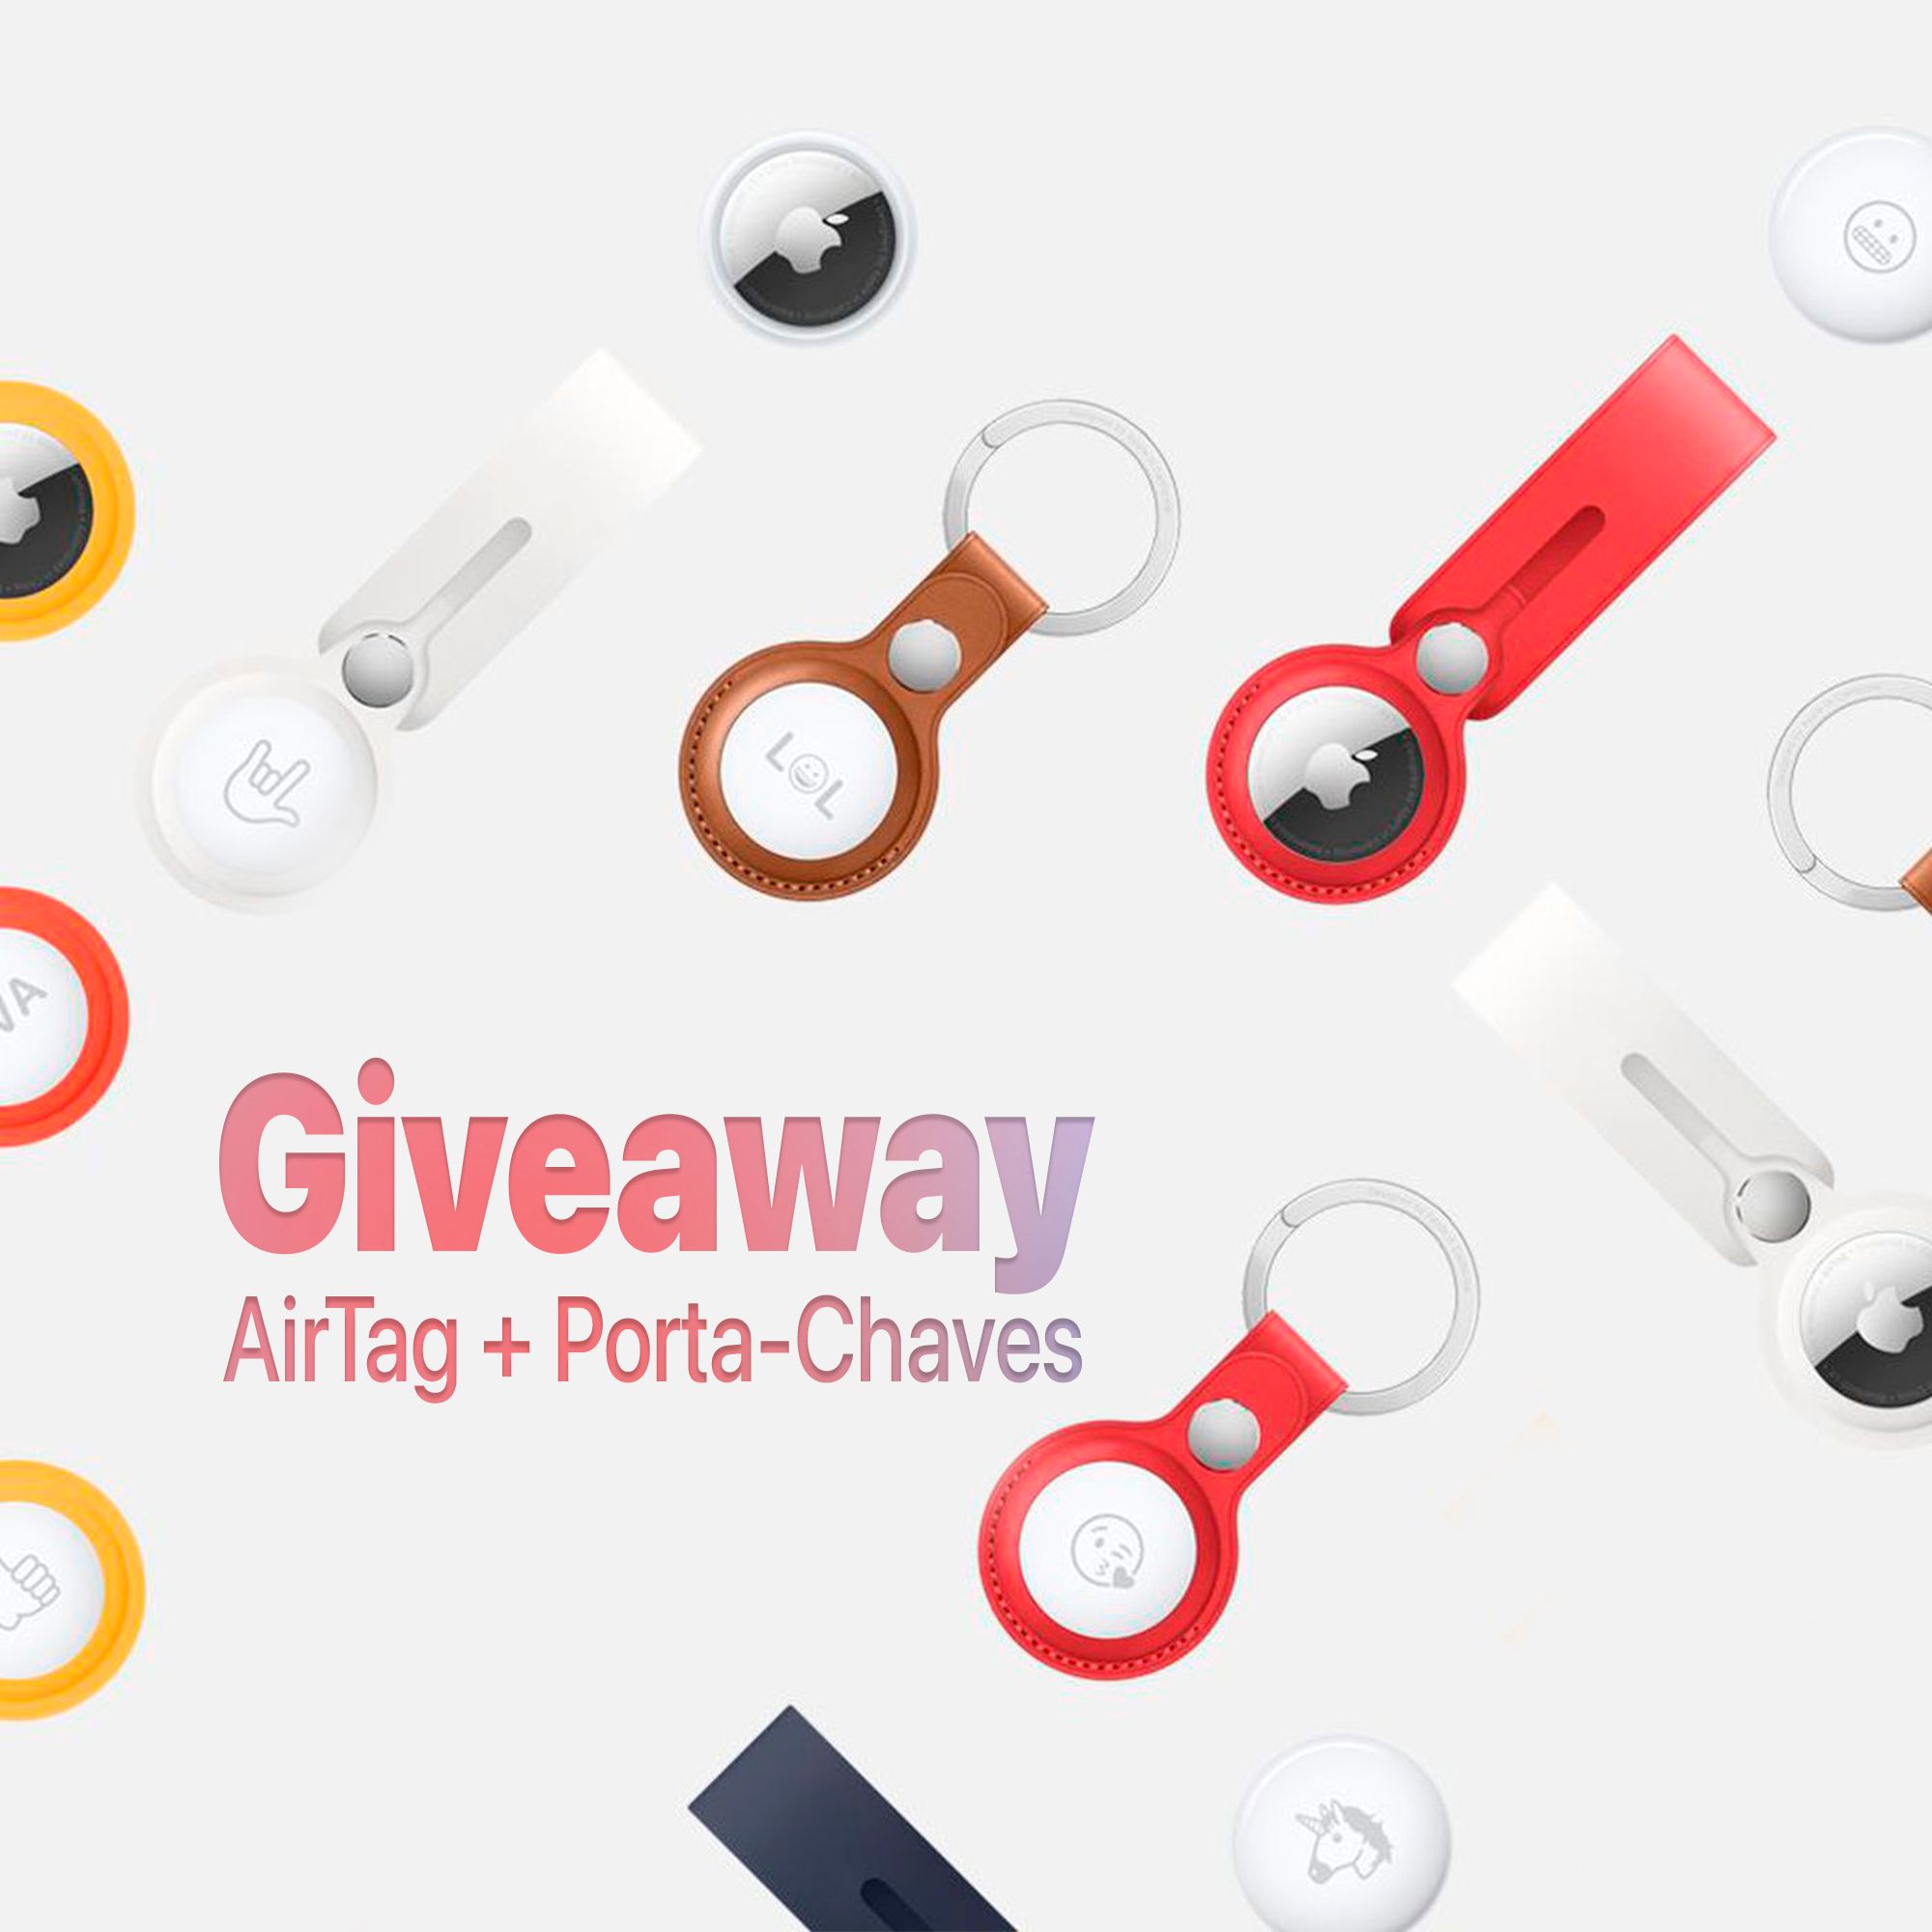 Giveaway de AirTag + Porta-chaves da Apple post image